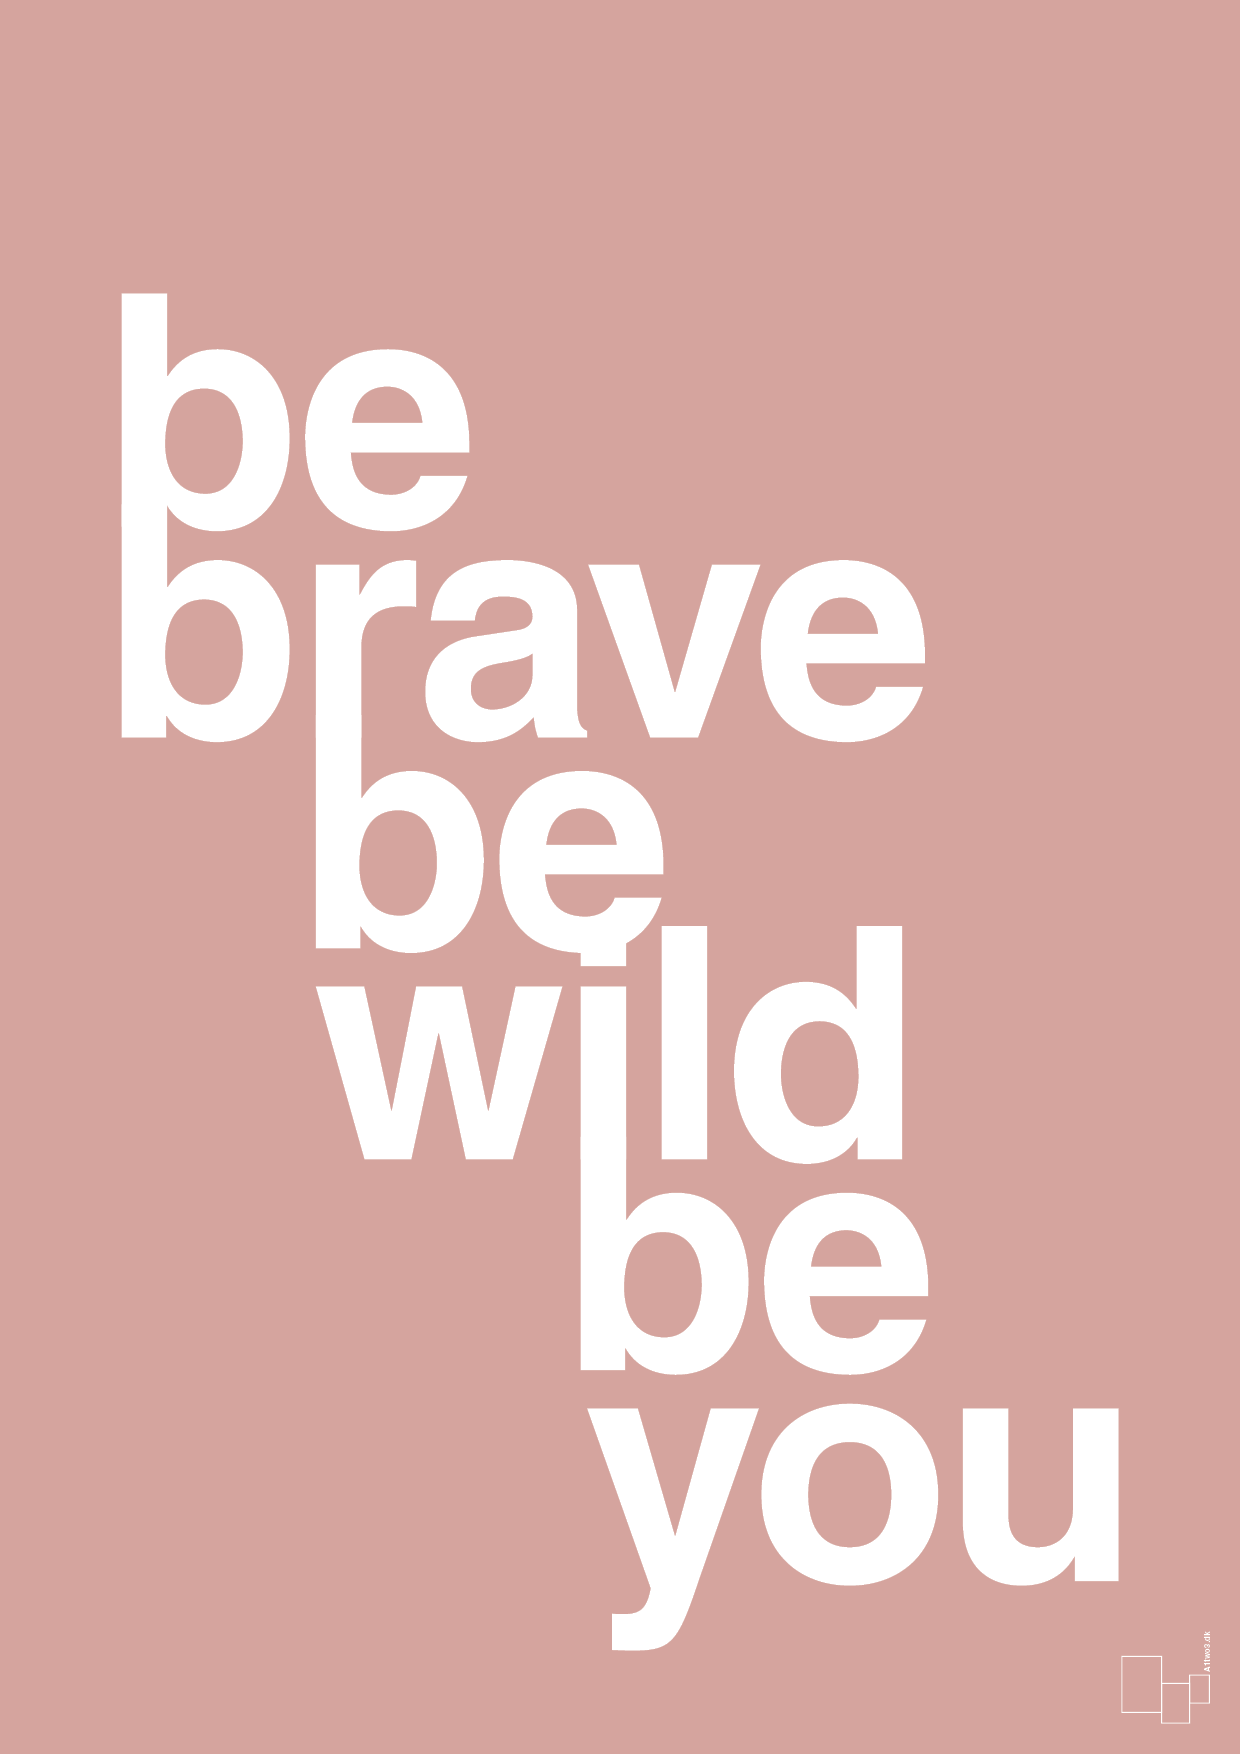 be brave be wild be you - Plakat med Ordsprog i Bubble Shell